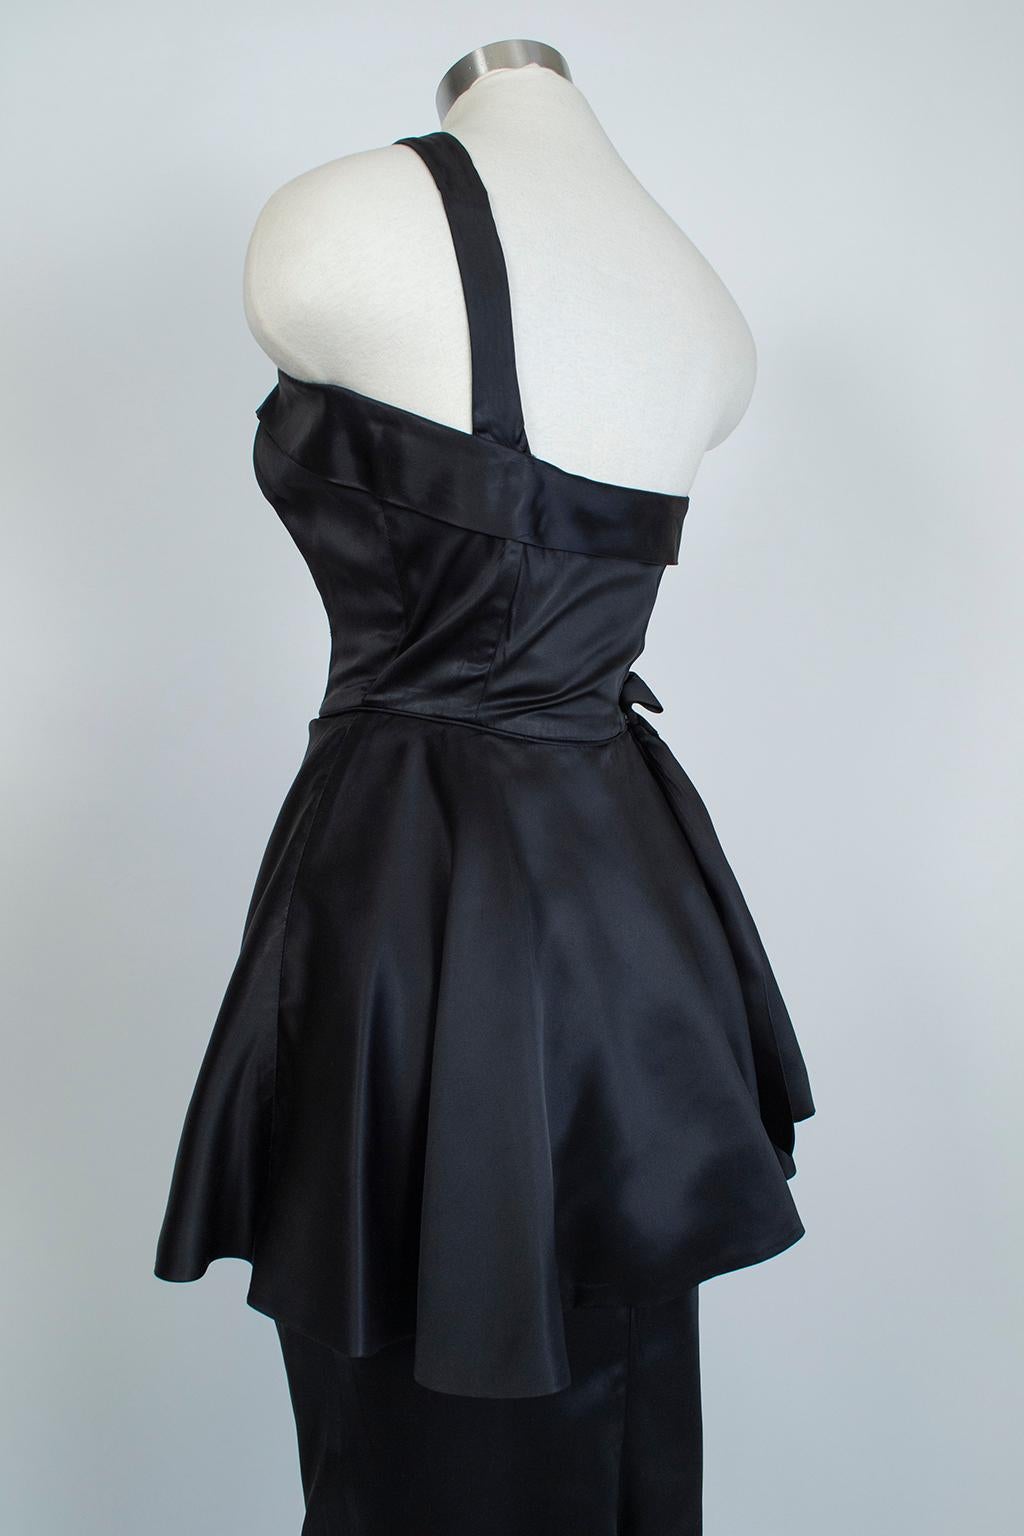 Black Satin Asymmetrical Mermaid Peplum Gown with Detachable Hip Sash- XS, 1950s 1